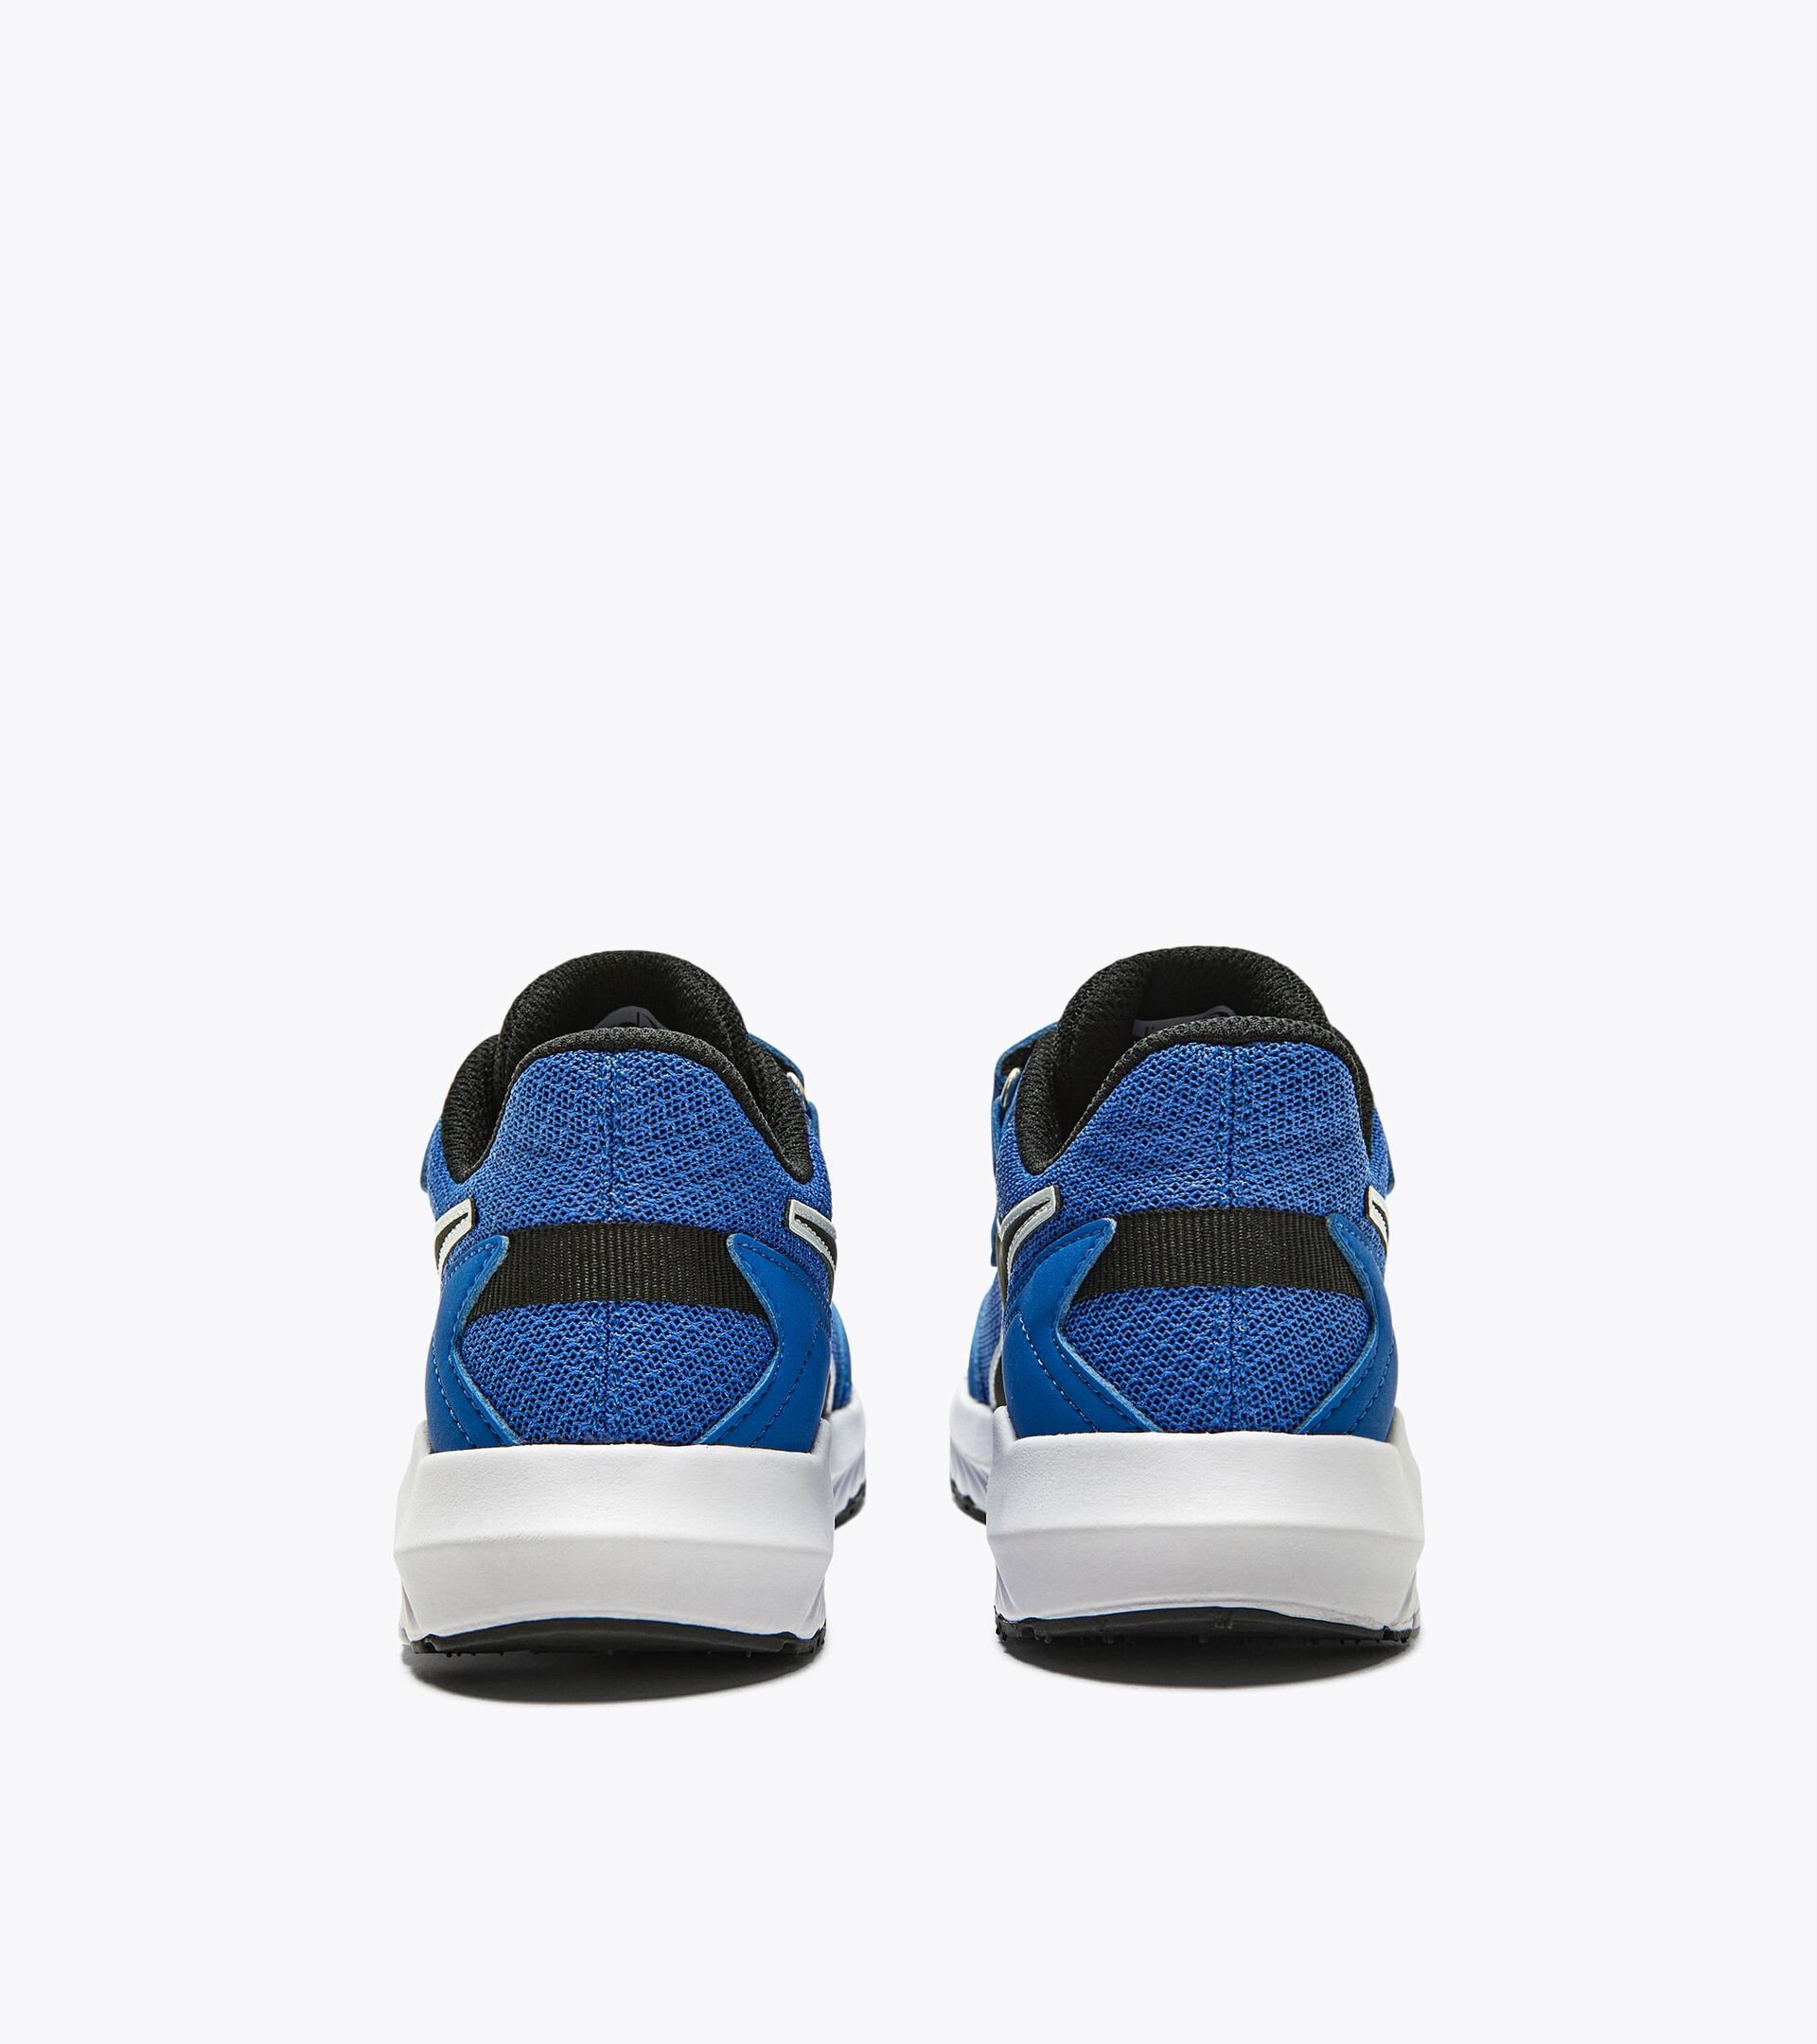 Junior running shoes - Gender Neutral FALCON 3 JR V PRINCESS BLUE/BLACK - Diadora